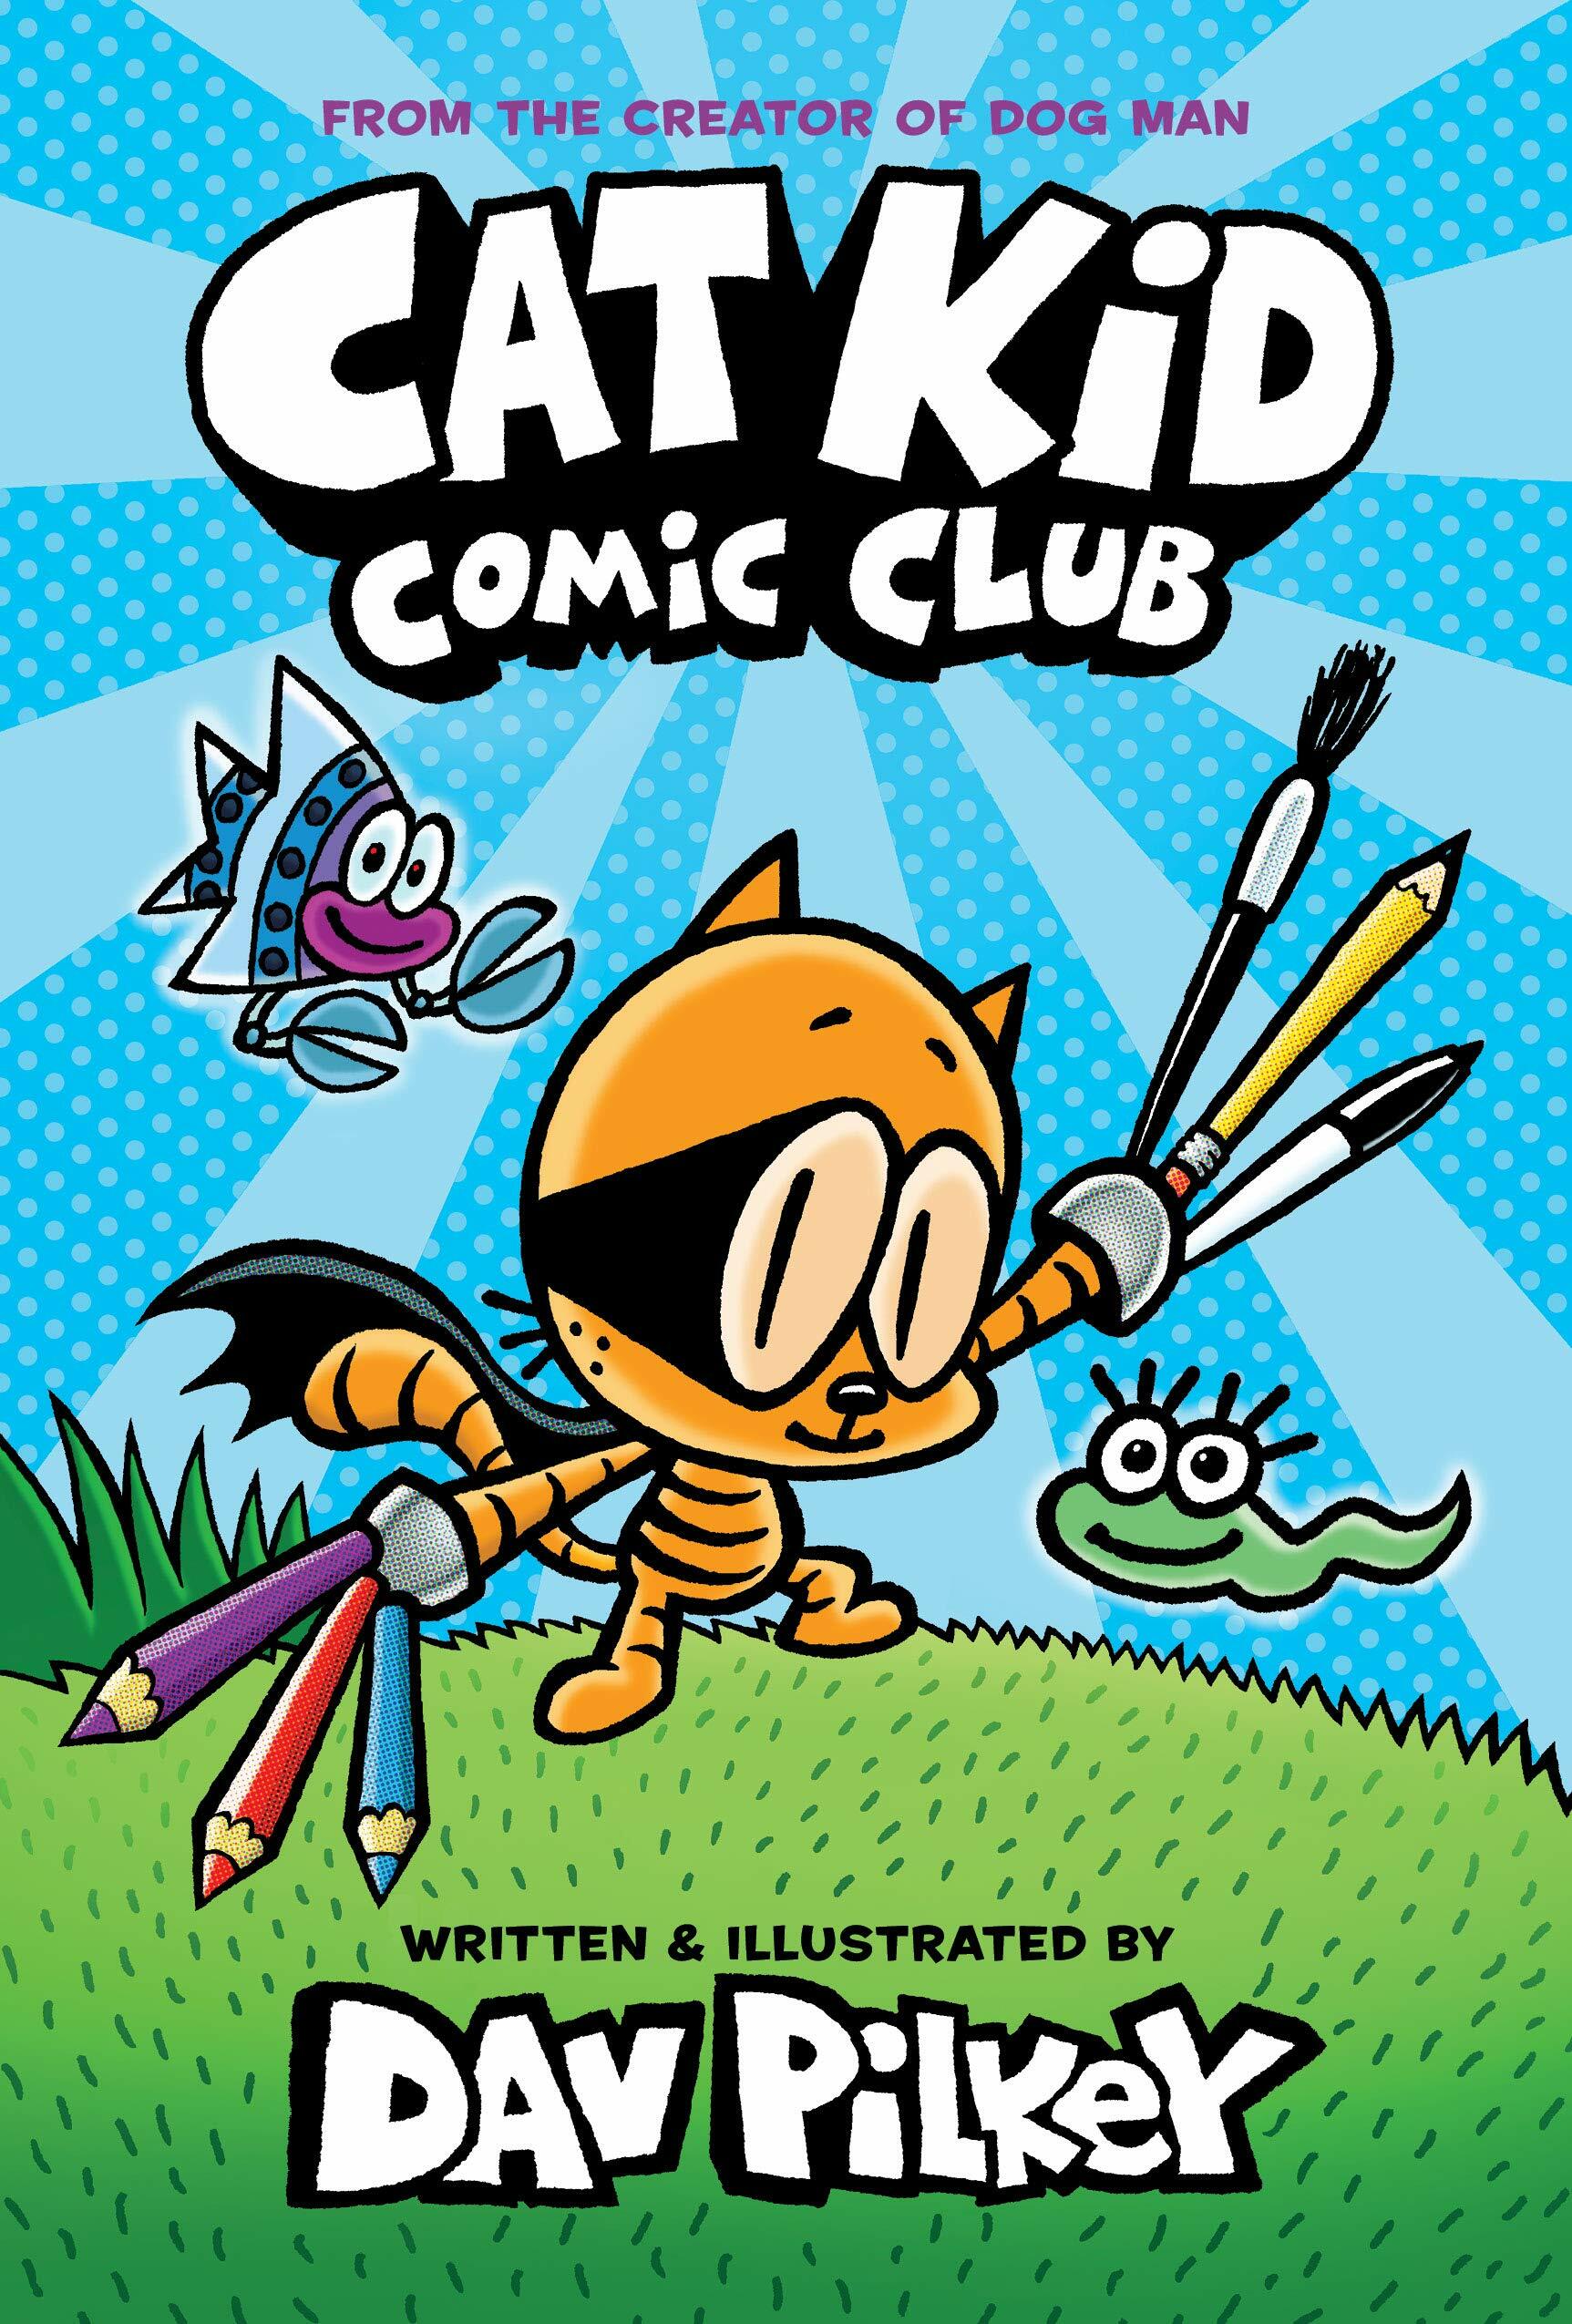 Cat kid comic club: from the creator of dog man. 1 표지